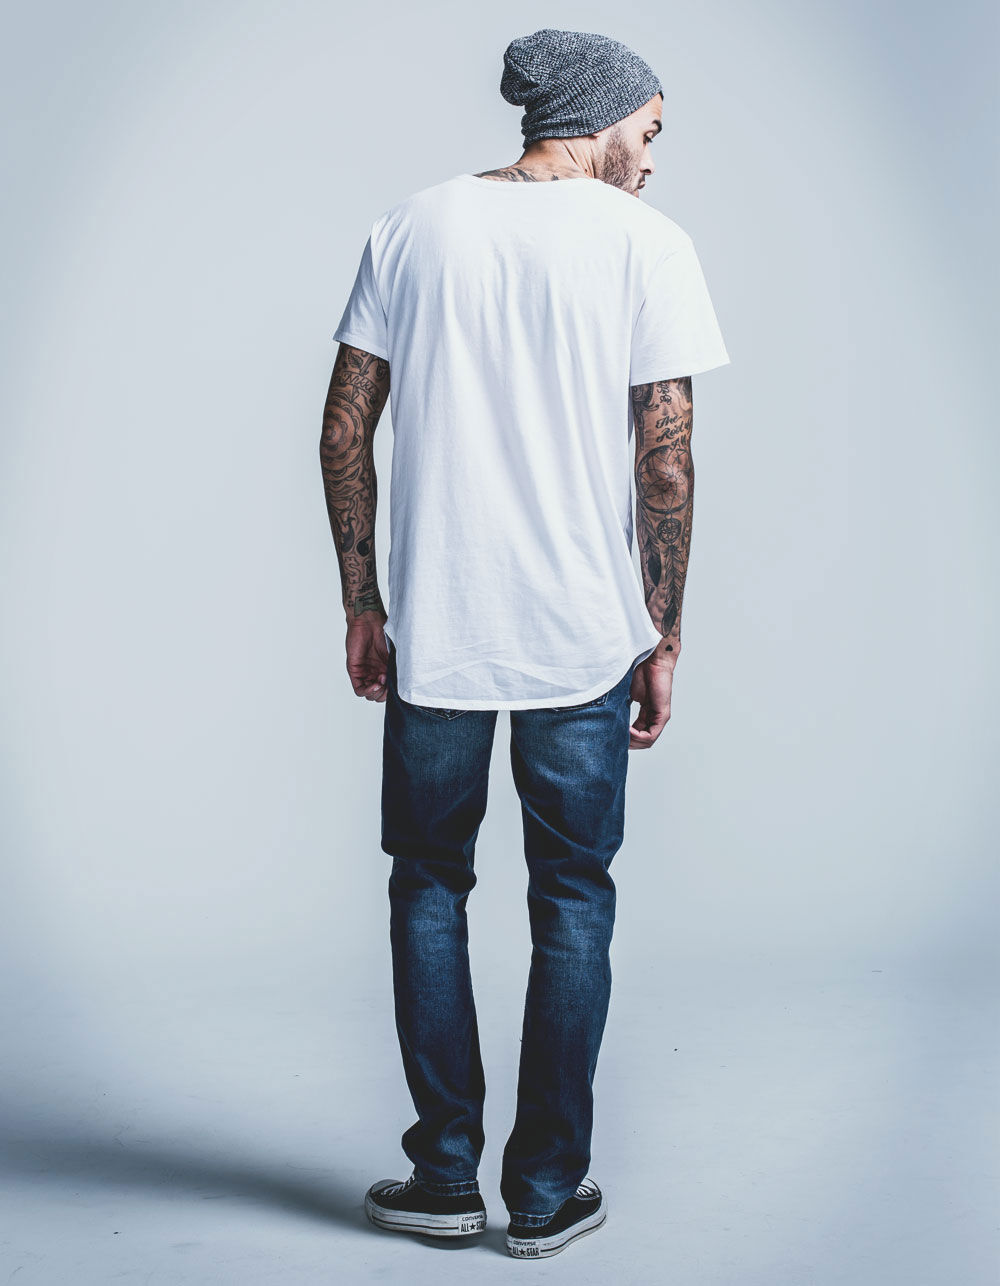 RSQ London Mens Teens Skinny Dark Washed Denim Jeans, 30x32 Color Code #811